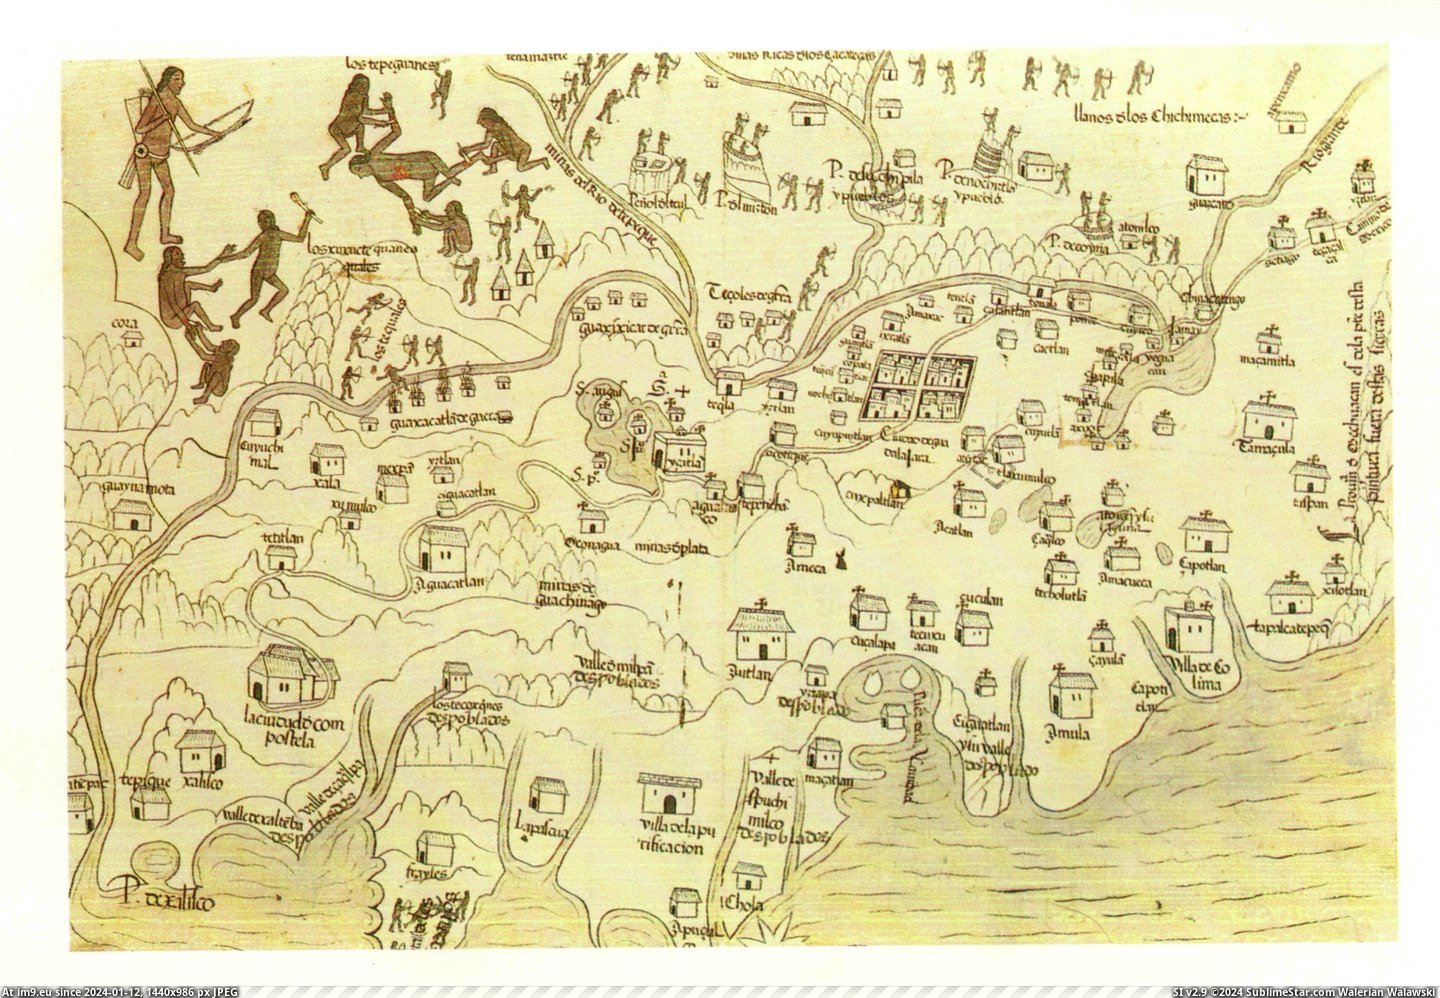 #Map #Building #Cross #Galicia #Nueva #Uprising #Shortly #Natives #Denotes [Mapporn] Map of Nueva Galicia in 1540 shortly after the uprising of natives. Each building with a cross on it denotes where the Pic. (Image of album My r/MAPS favs))